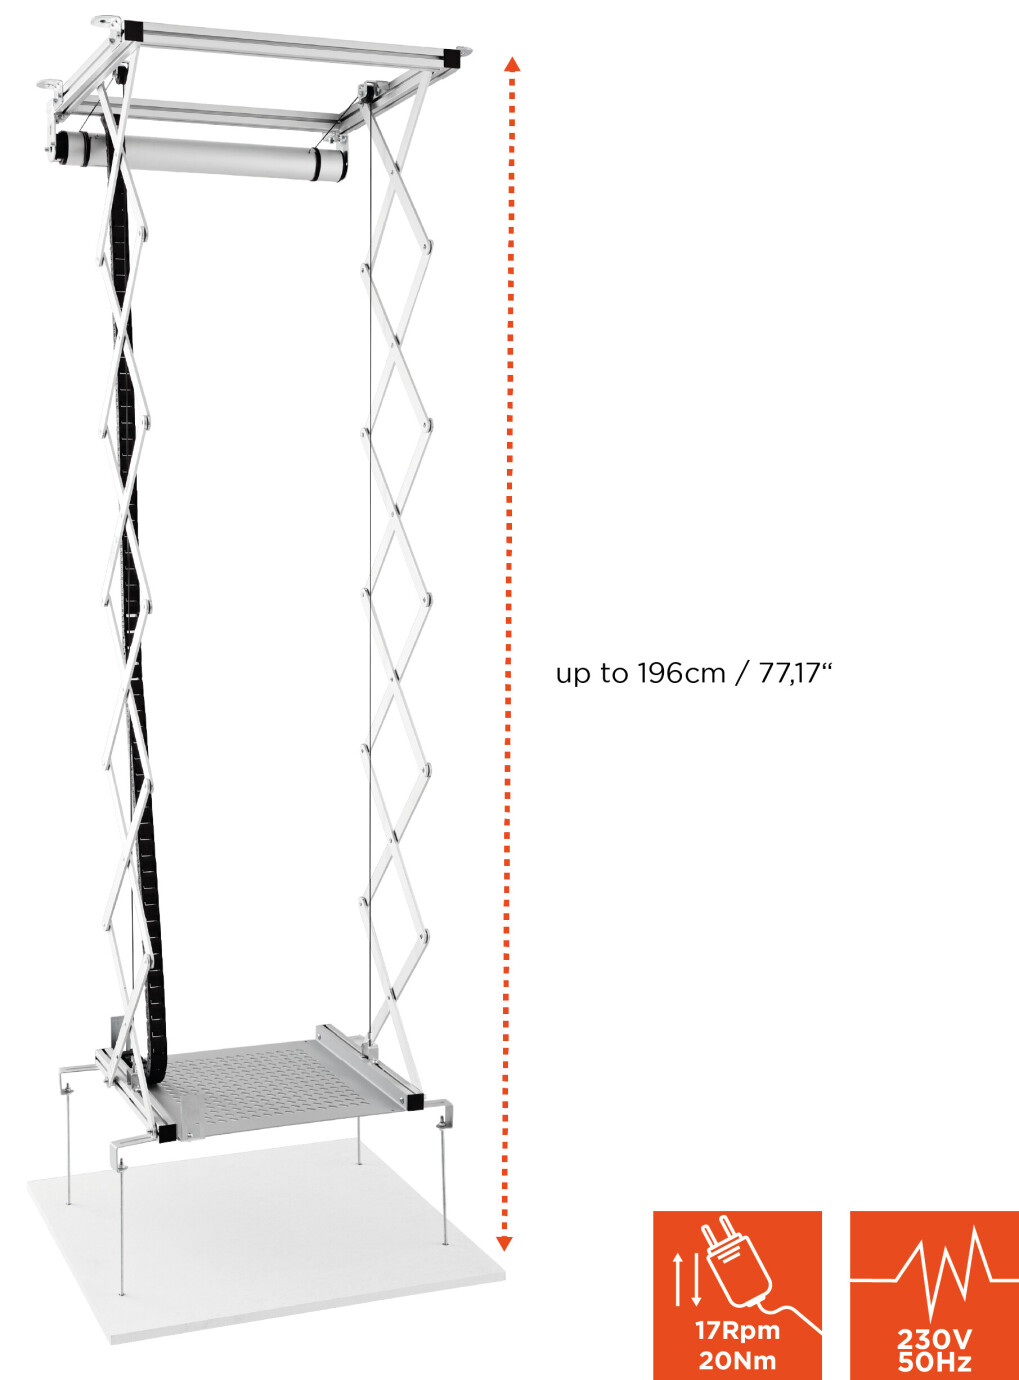 Vorschau: celexon Beamer Deckenlift PL2000 Plus - max. ausfahrbar bis 196 cm - 25kg Traglast